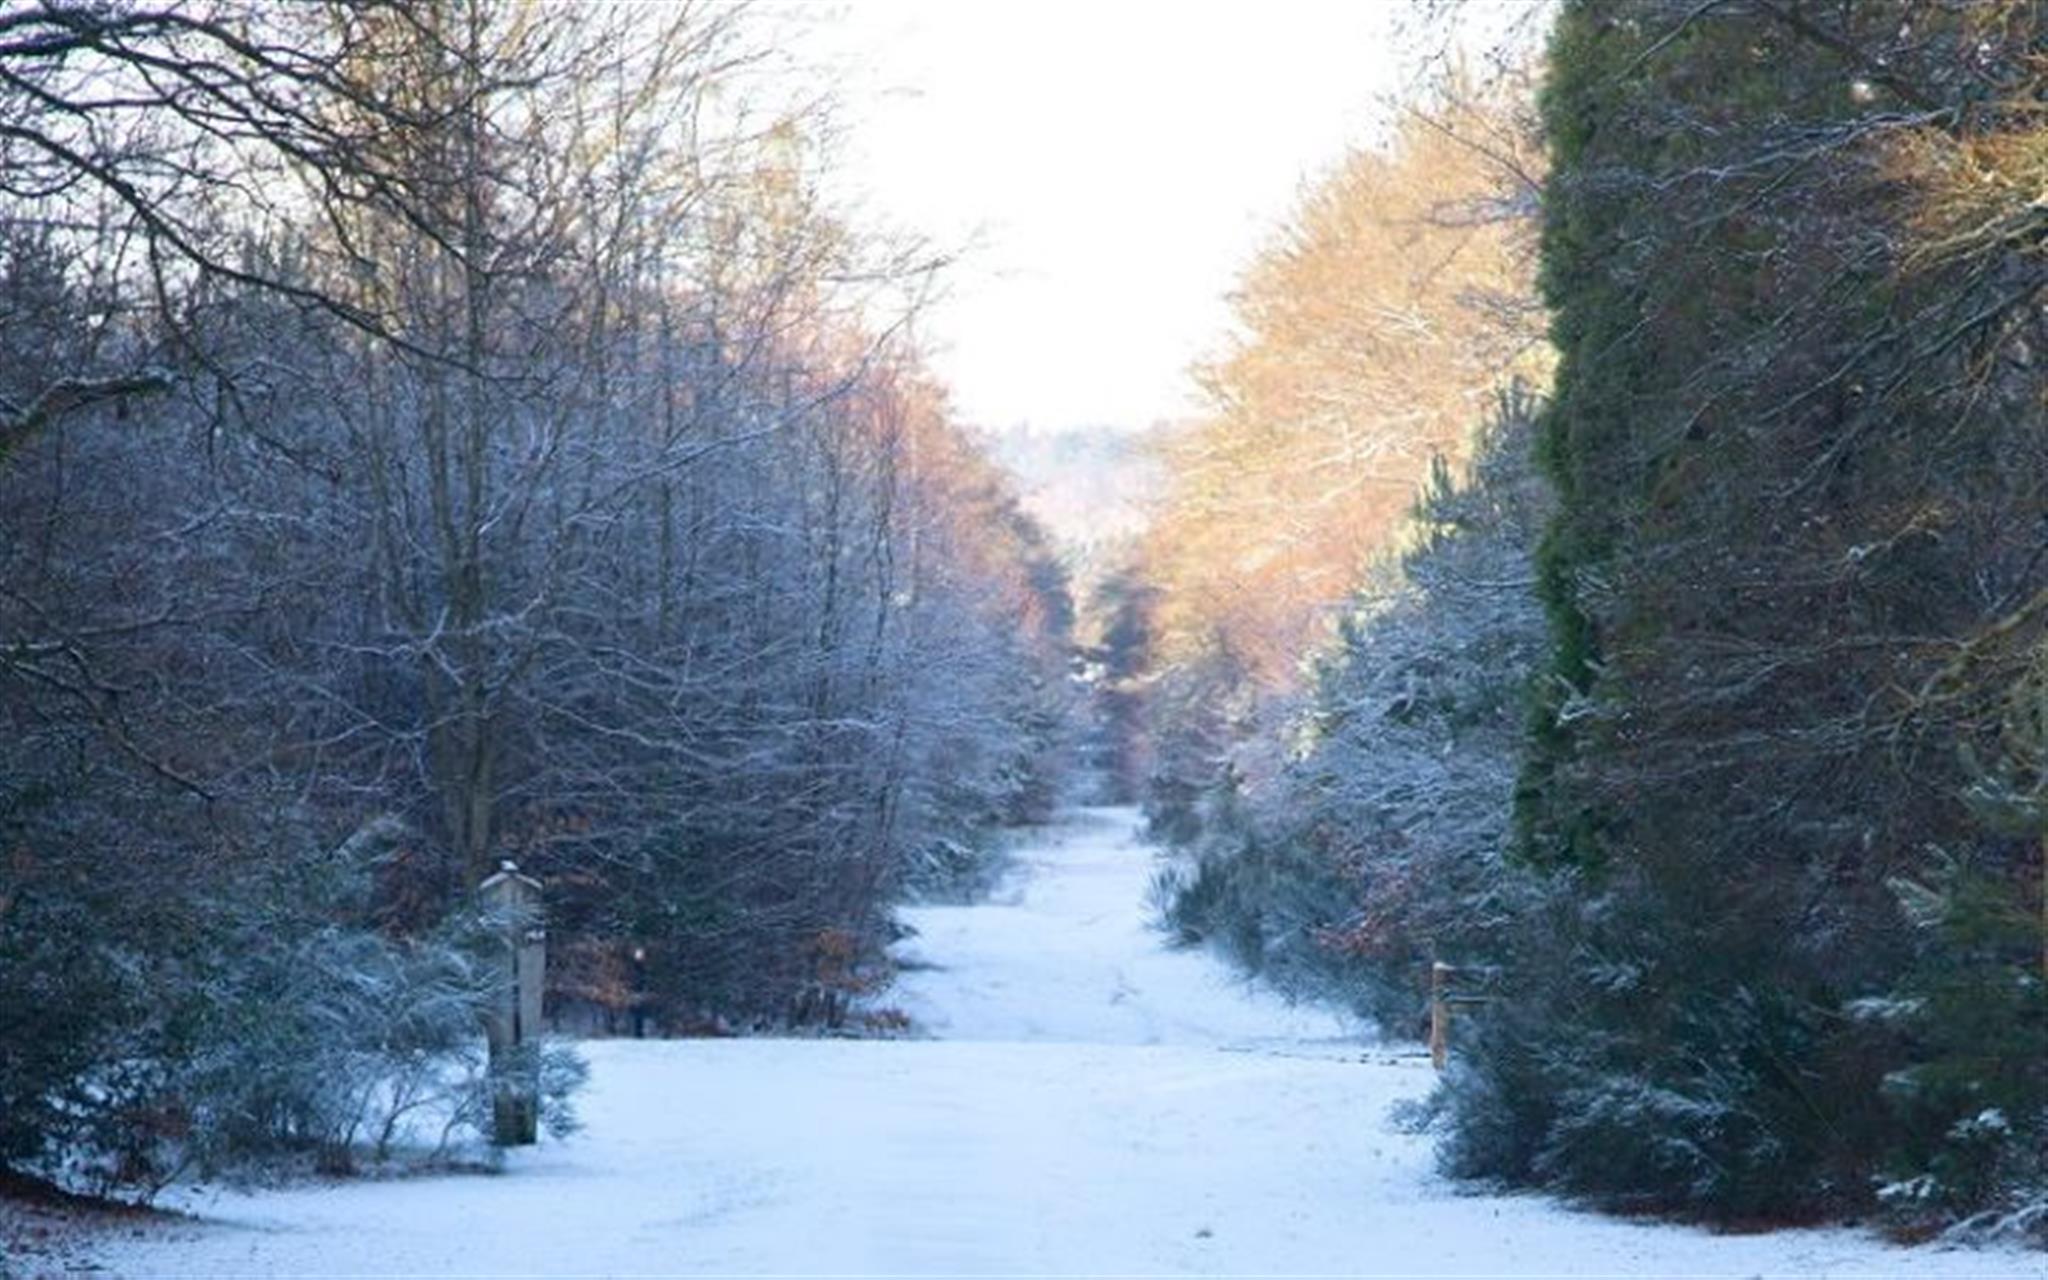 Brandon Country Park’s Winter Prize Trail